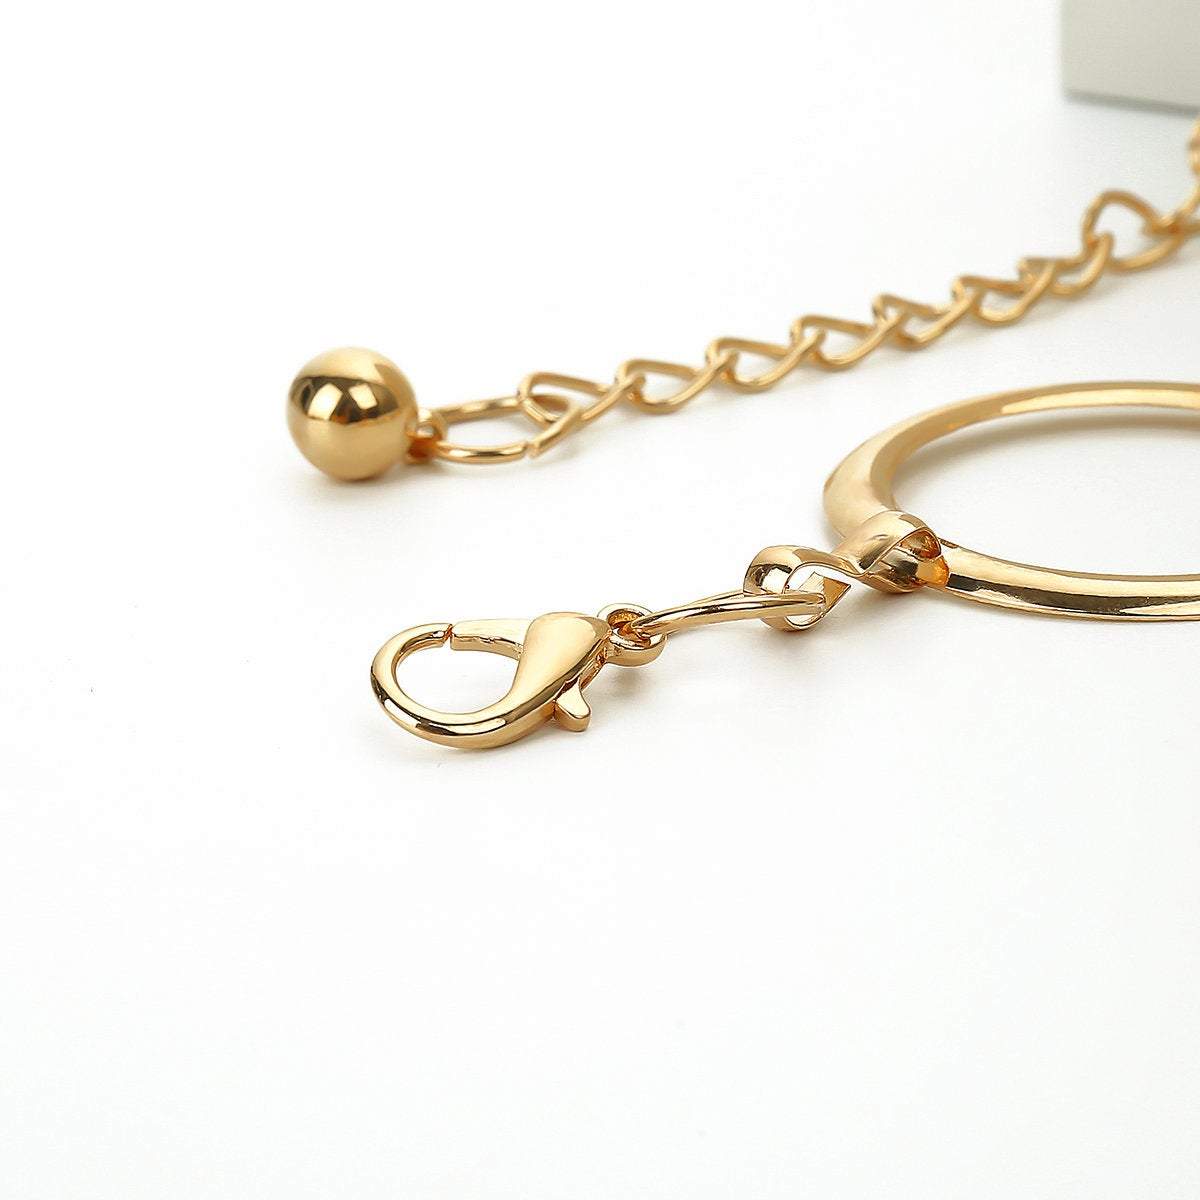 Geometrical O Ring Shape Waist Belt - Chic Gold Tone Body Chain - Elegent Minimalist Big Ring Belly Chain